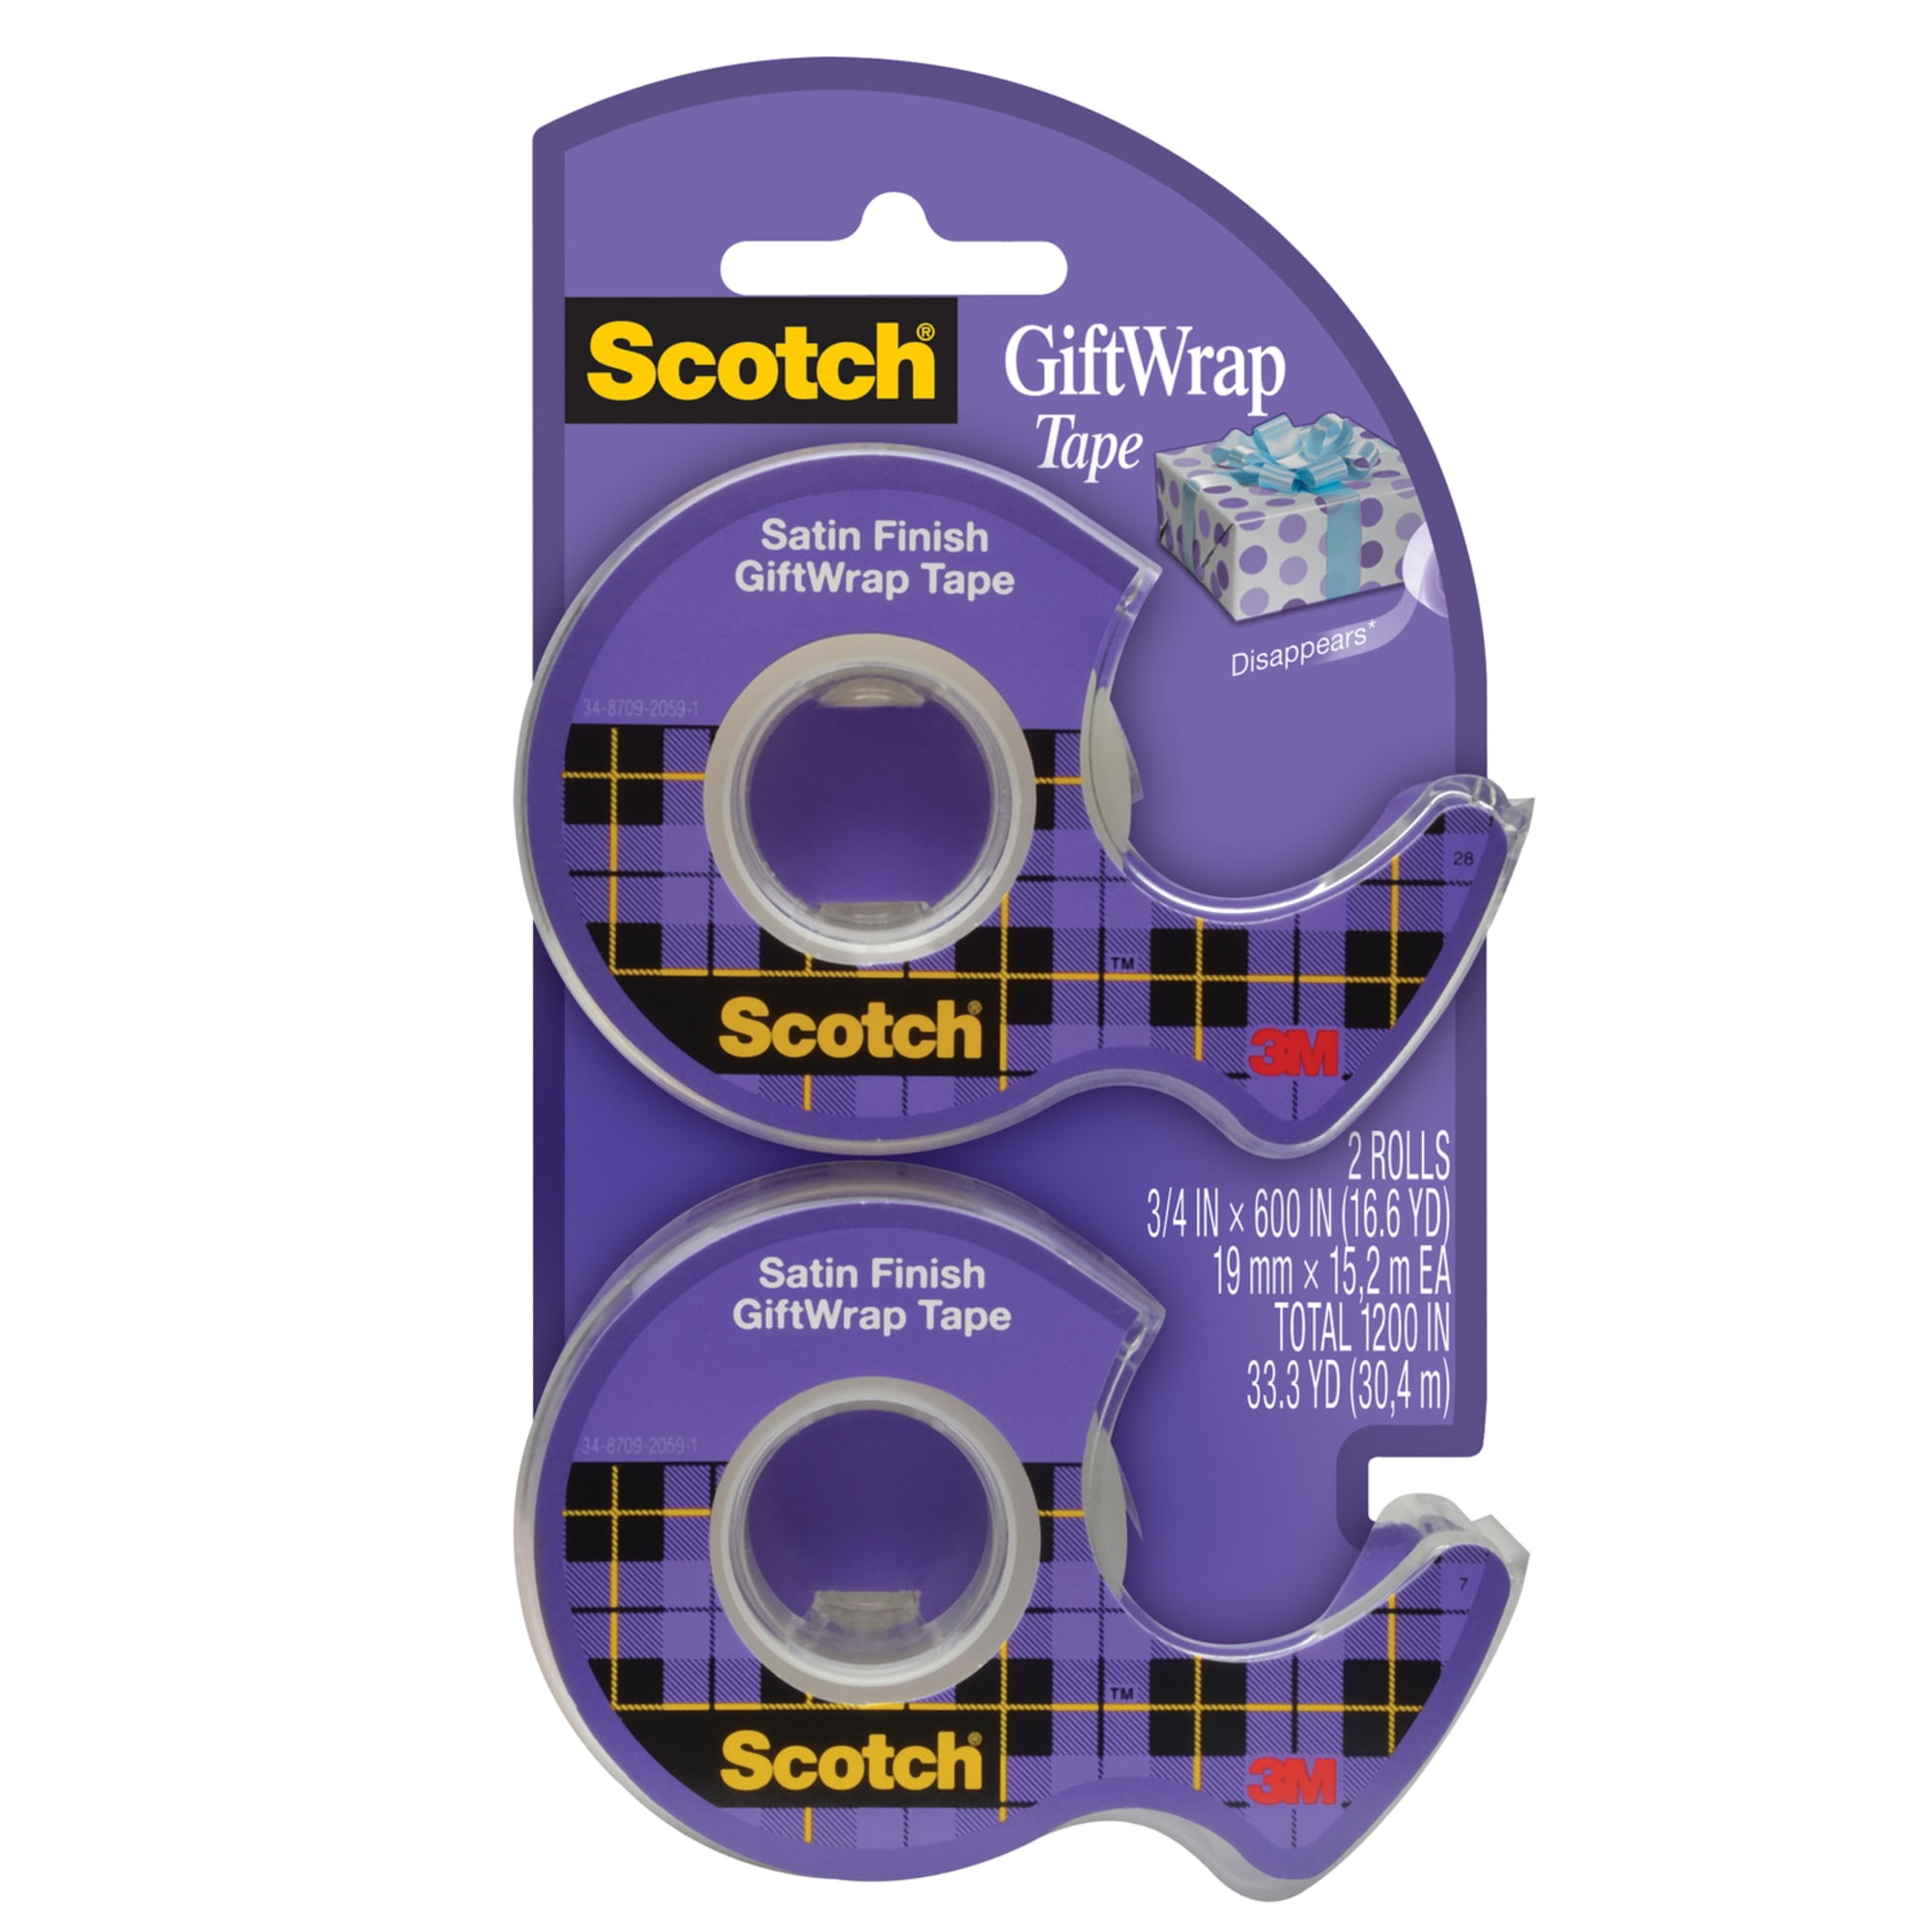 Scotch Gift Wrap Tape, 3/4 in. x 600 in., 2 Dispensers